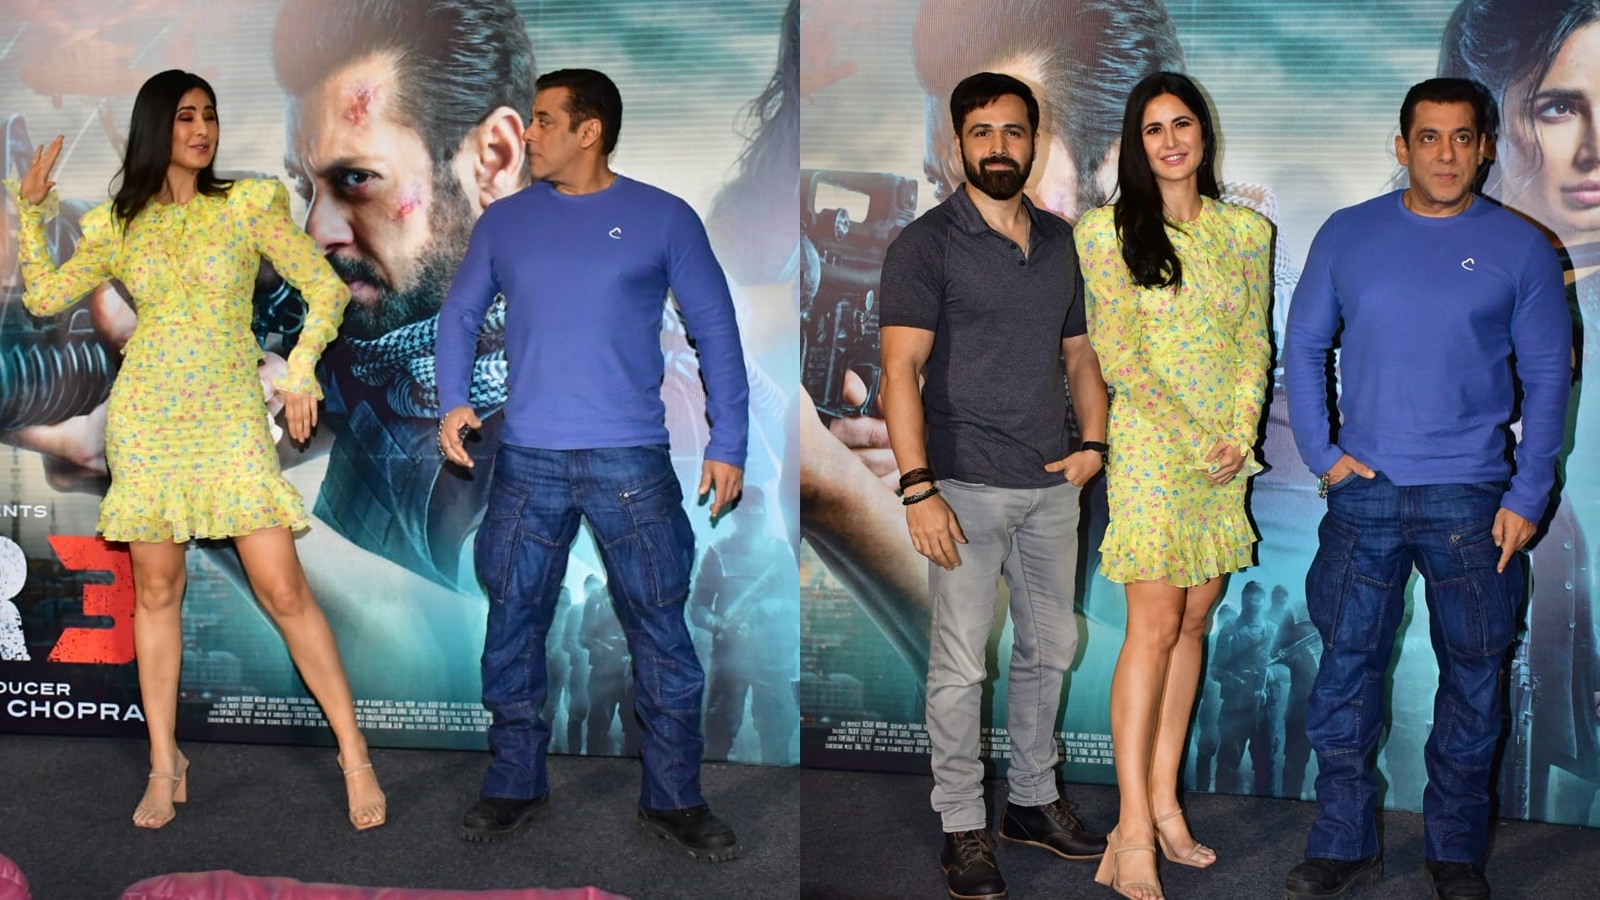 Katrina Kaif Xxx Video Jisme Choda Jata Hai - Salman Khan says Tiger 3 has romance because of Katrina Kaif; actors dance  together at meet-and-greet event, see videos | Bollywood News - The Indian  Express